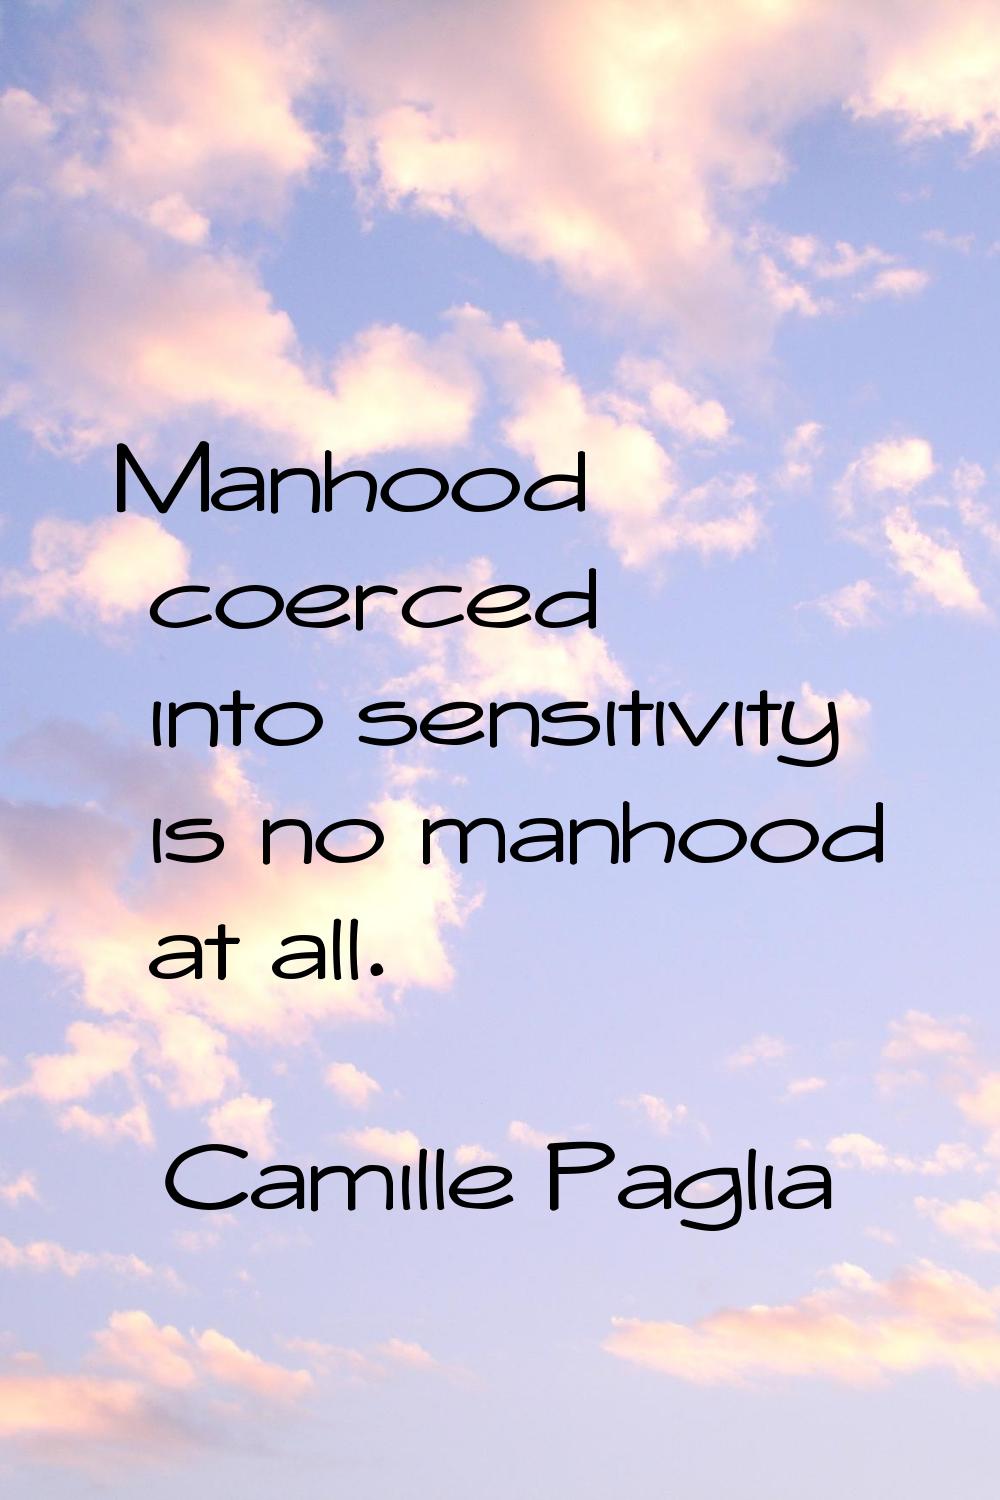 Manhood coerced into sensitivity is no manhood at all.